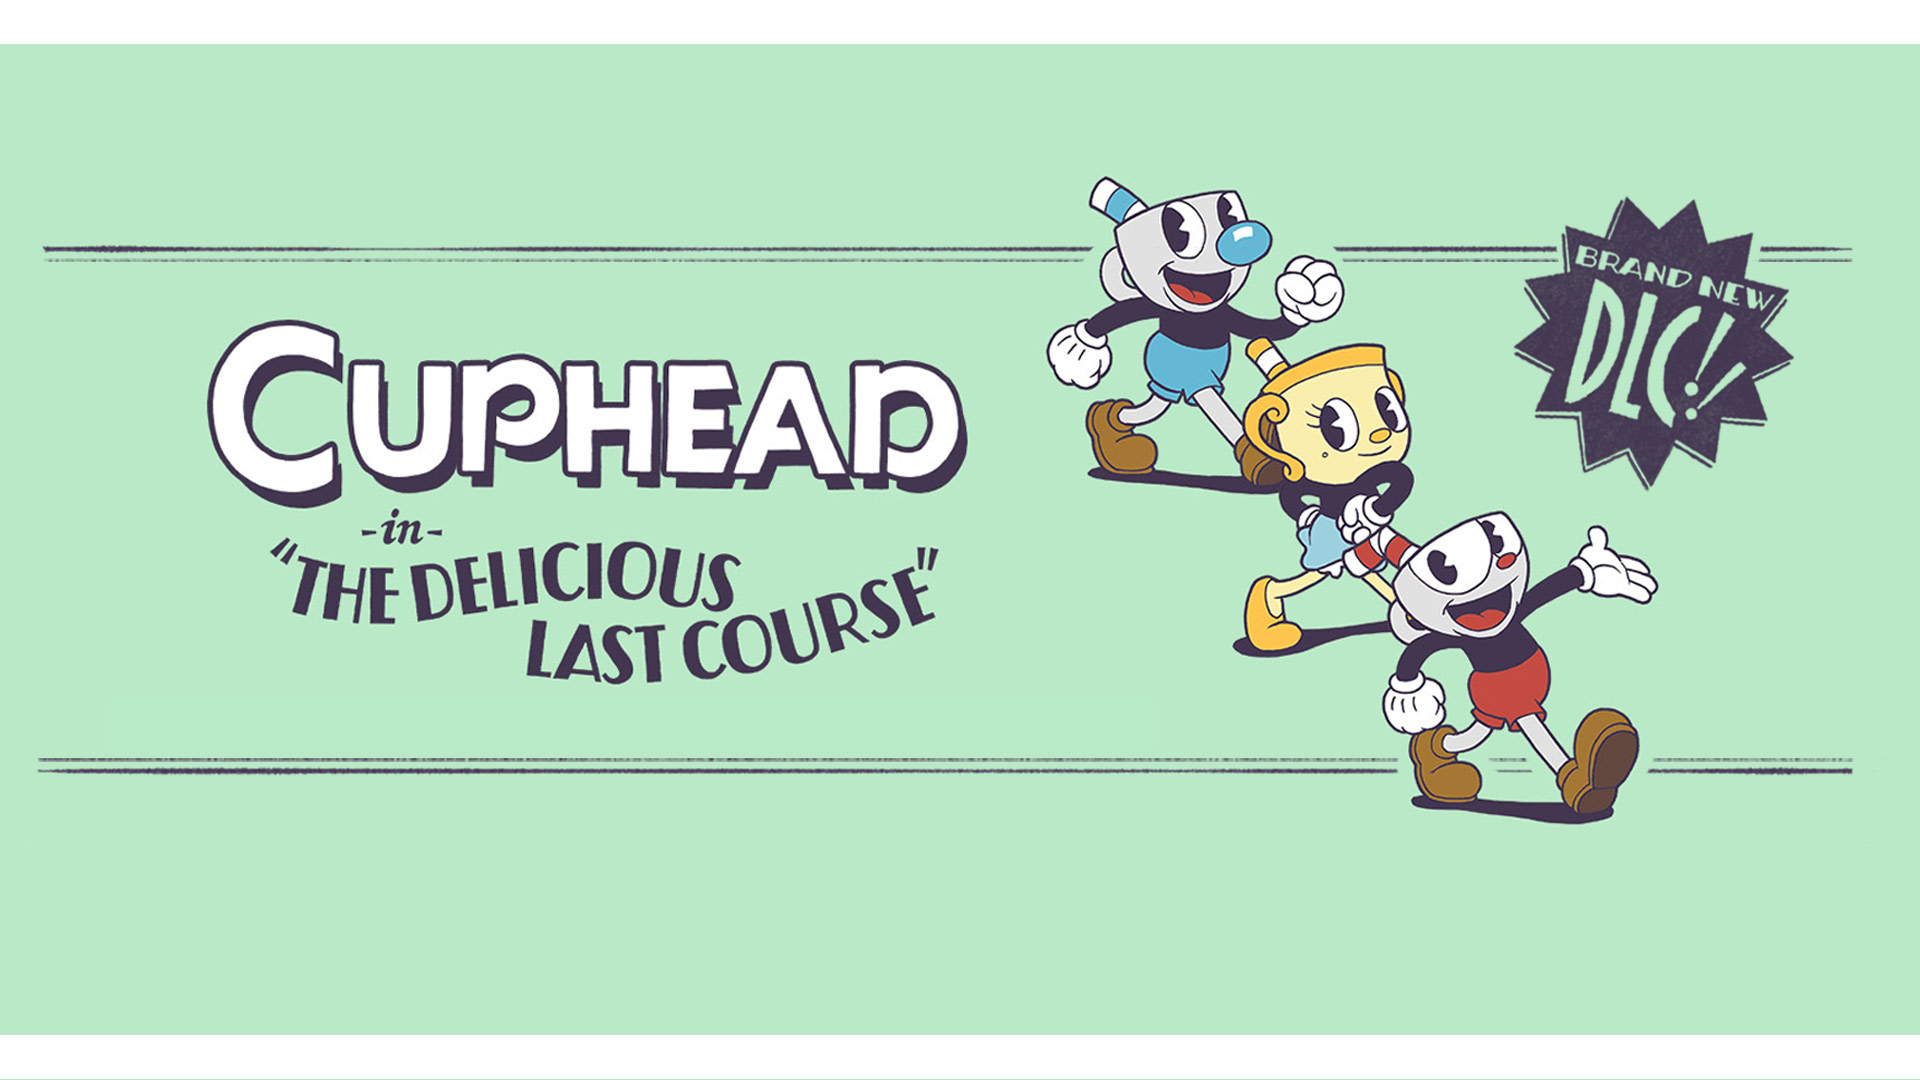 『Cuphead: The delicious last course』、新しい DLC！ポーズを決める 3 人の Cuphead キャラクター